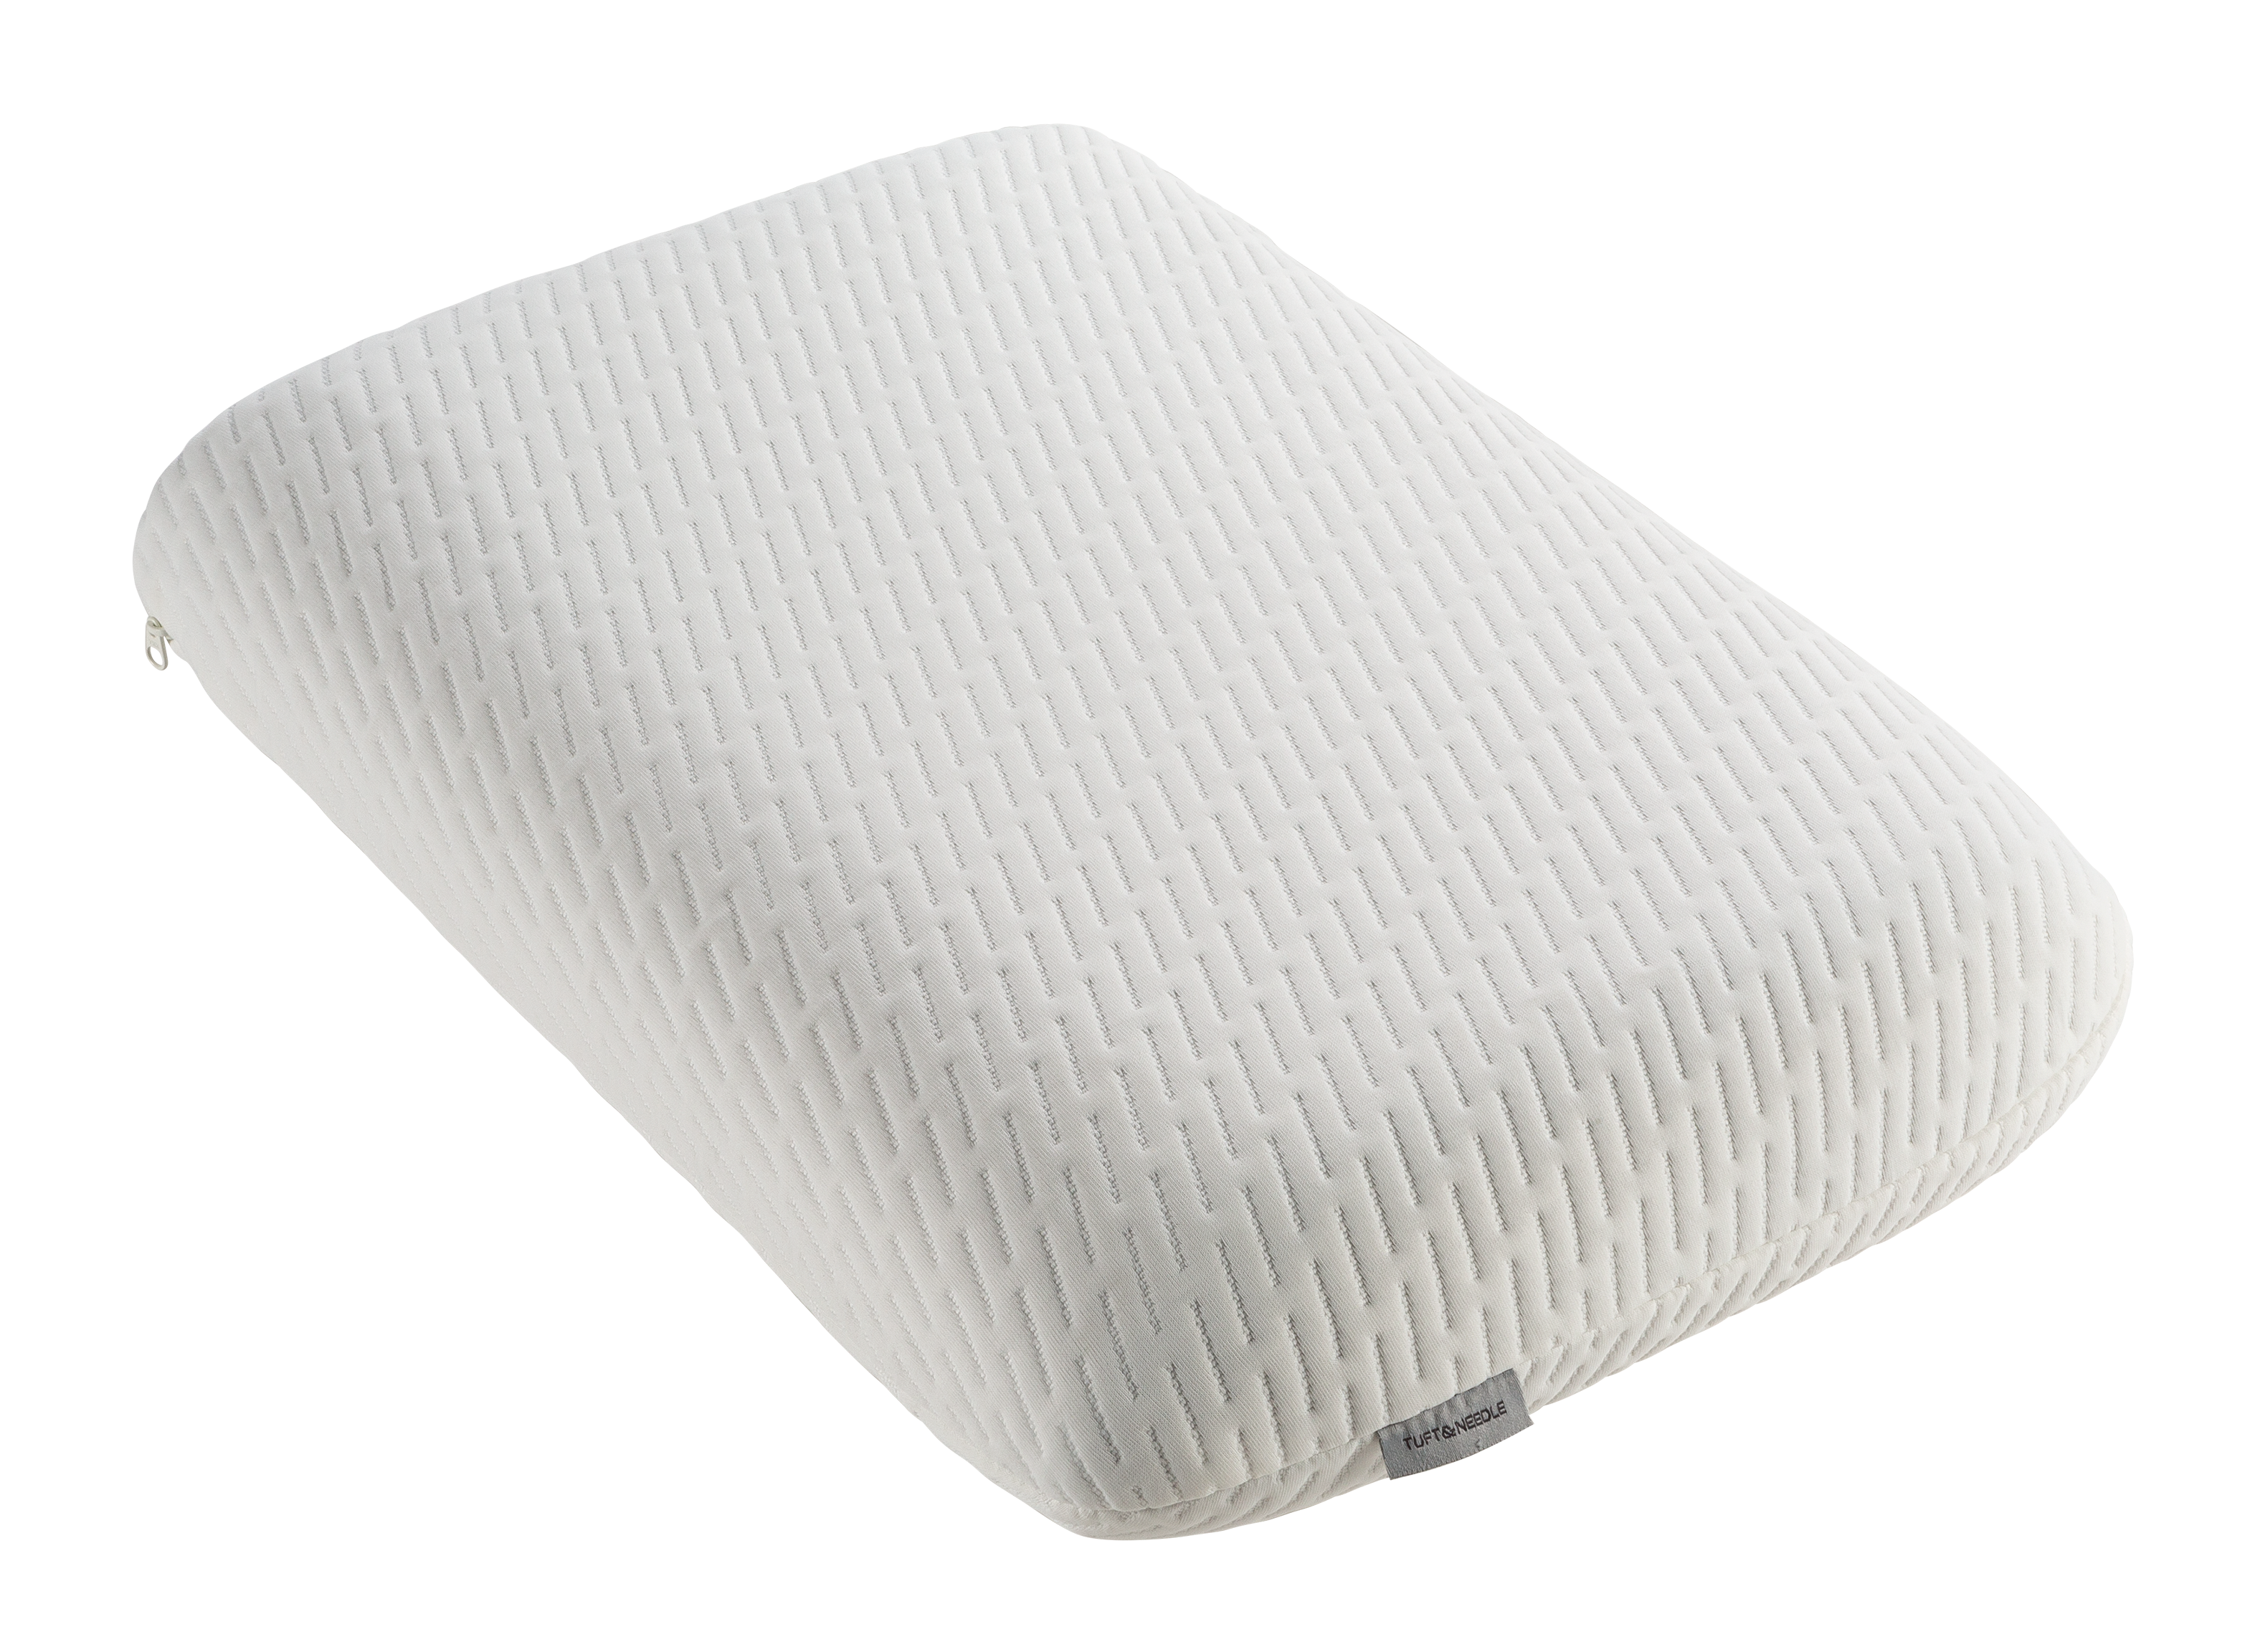 Tuft & Needle Original Foam Pillow Review - Consumer Reports